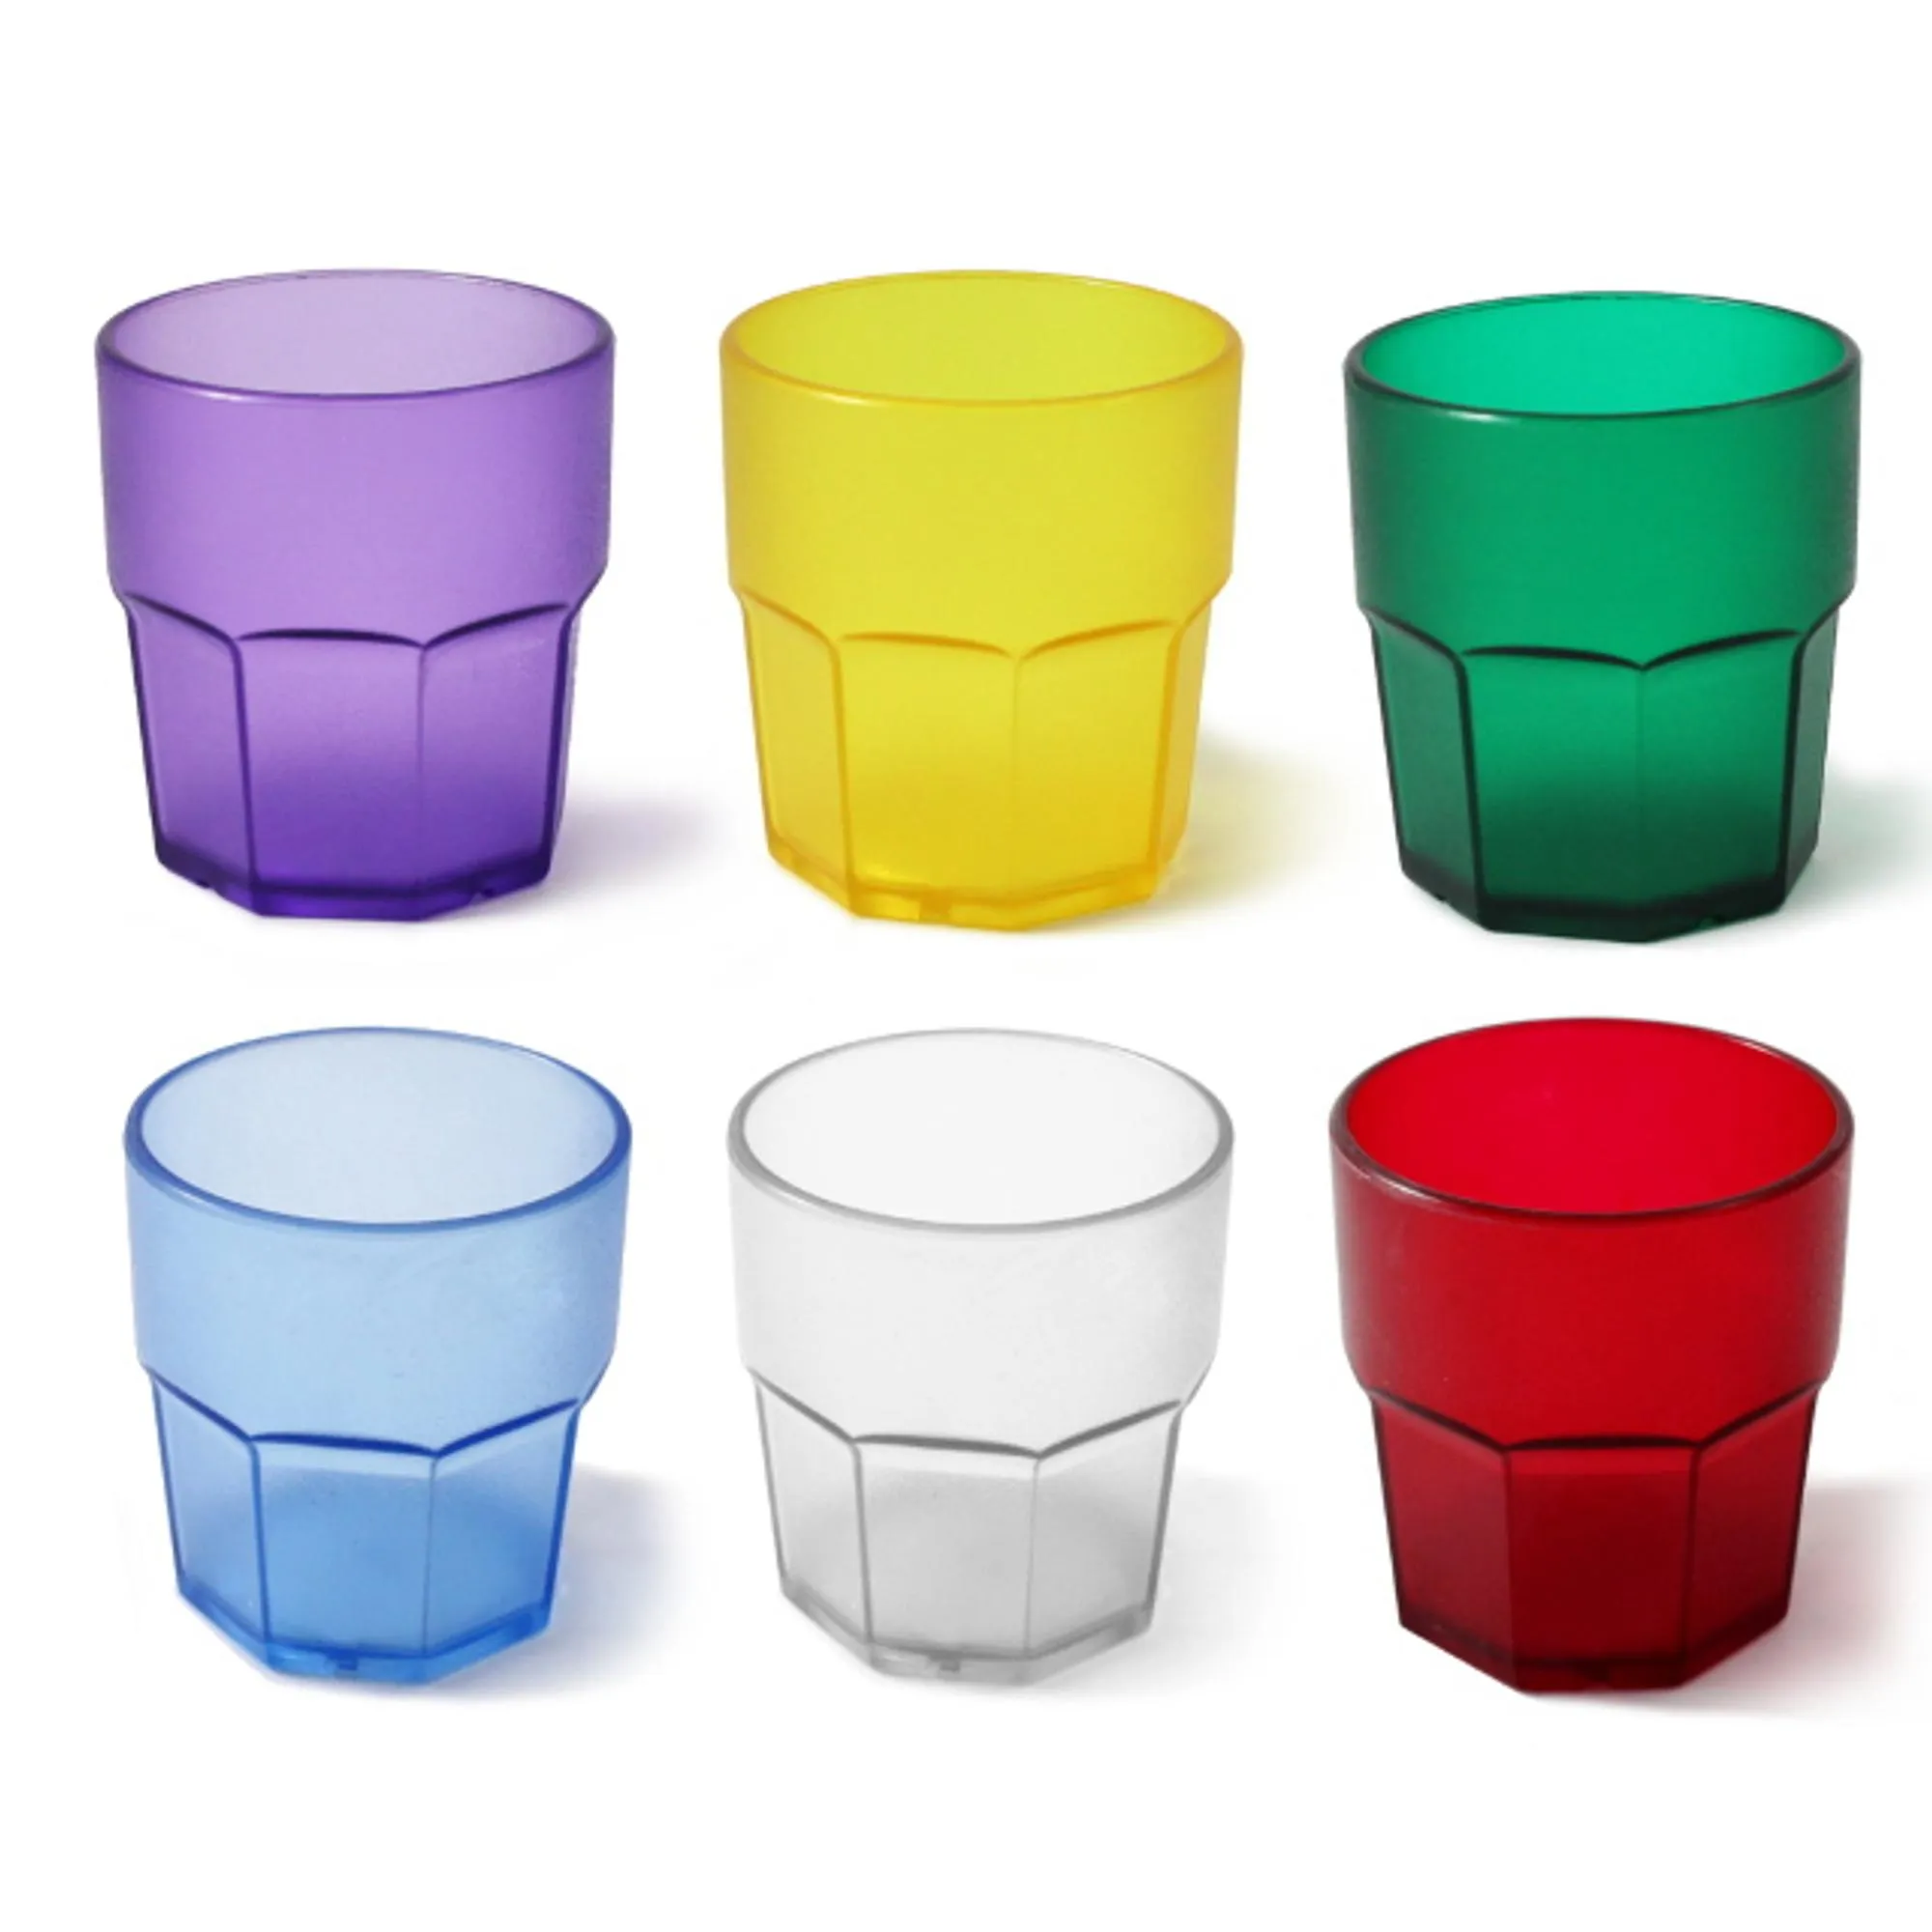 Bicchieri in Policarbonato ottagonale sei pezzi Ø7,7xh8,3 cm -220 ml impilabile multicolor